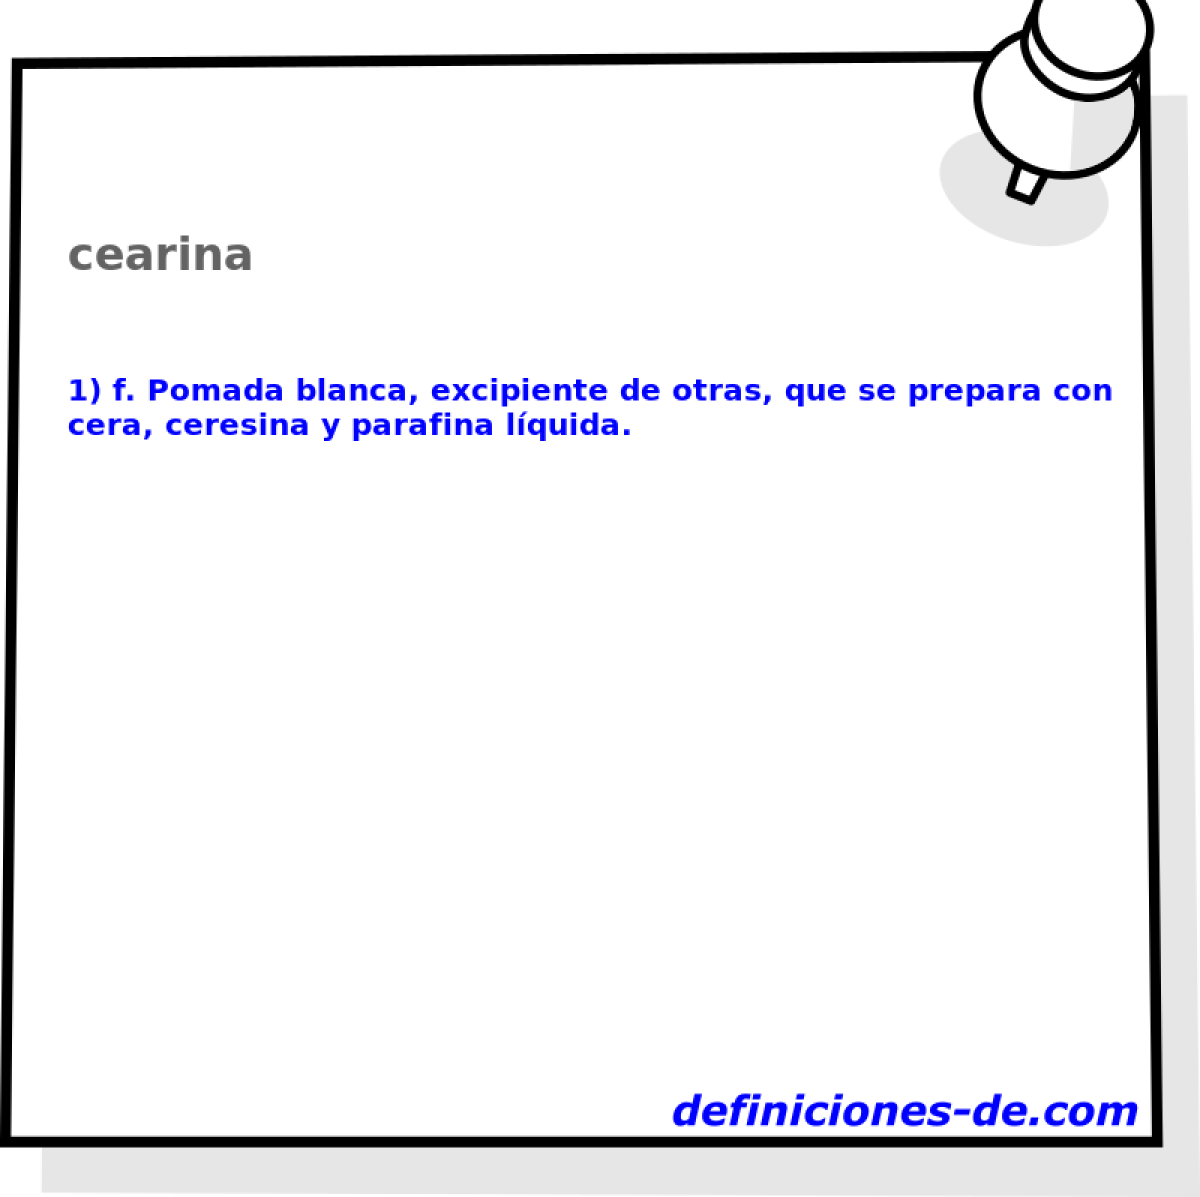 cearina 